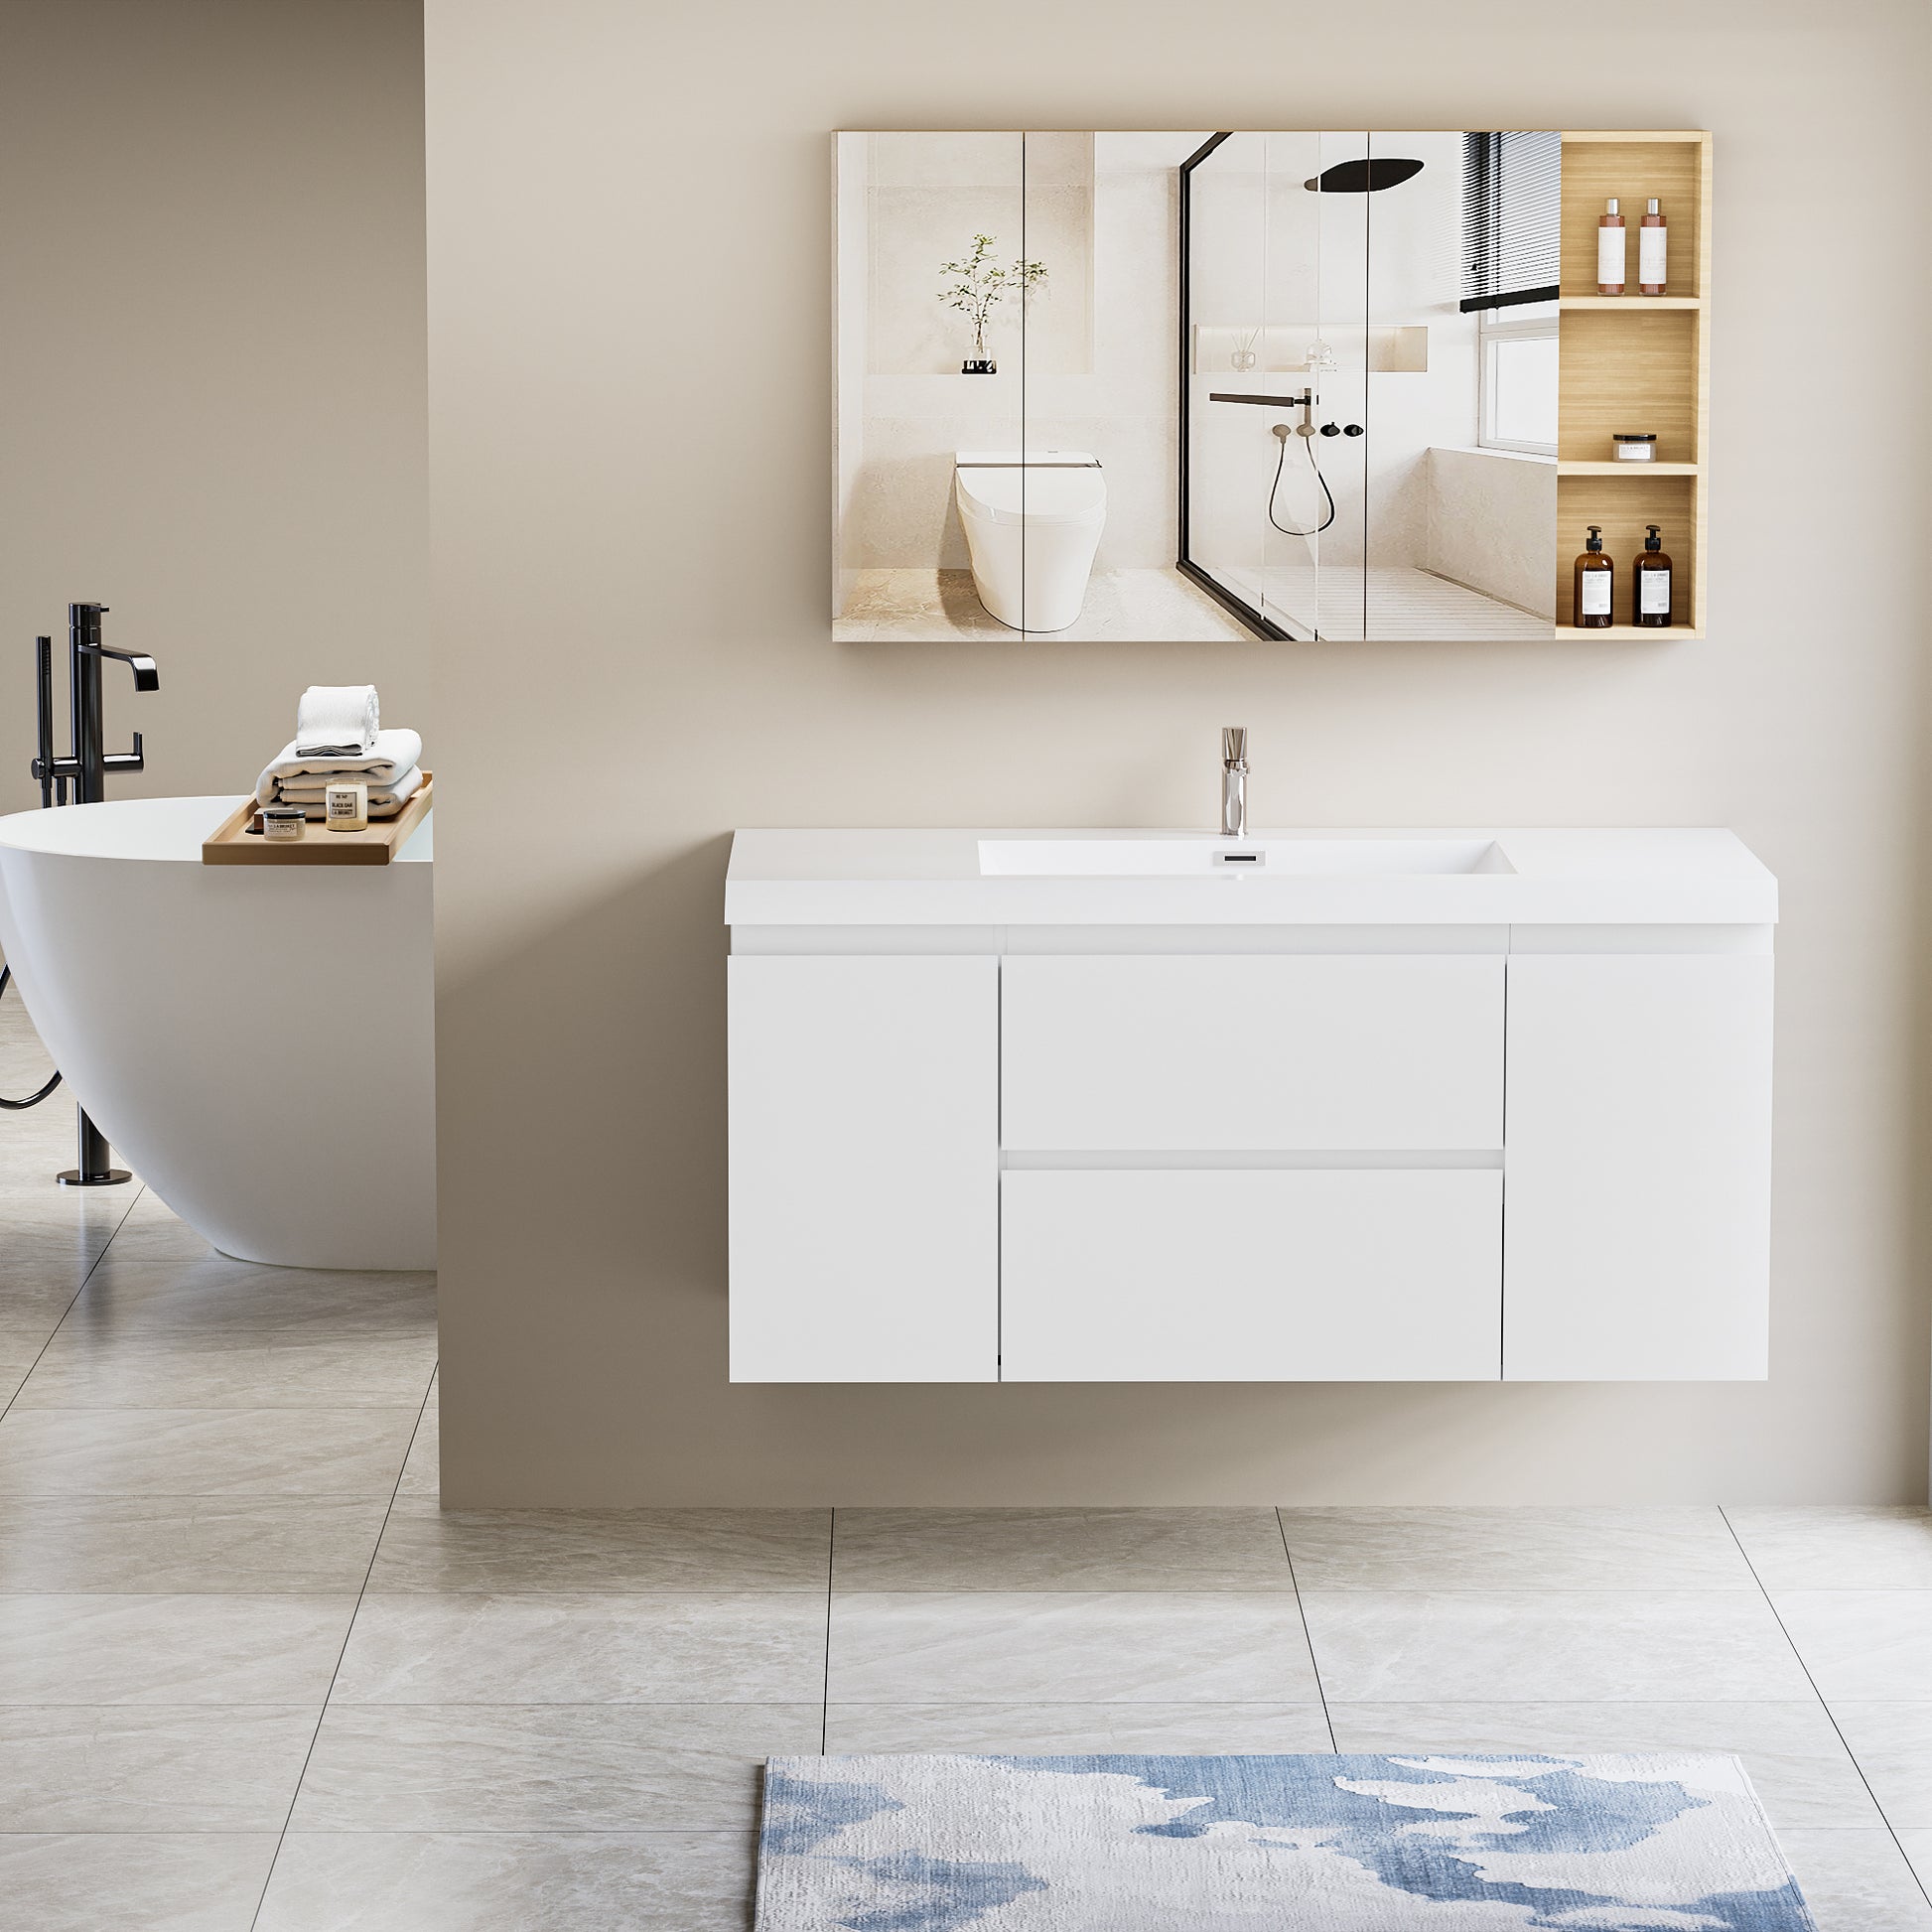 48" Floating Bathroom Vanity with Sink, Modern Wall 2-white-2-bathroom-wall mounted-mdf